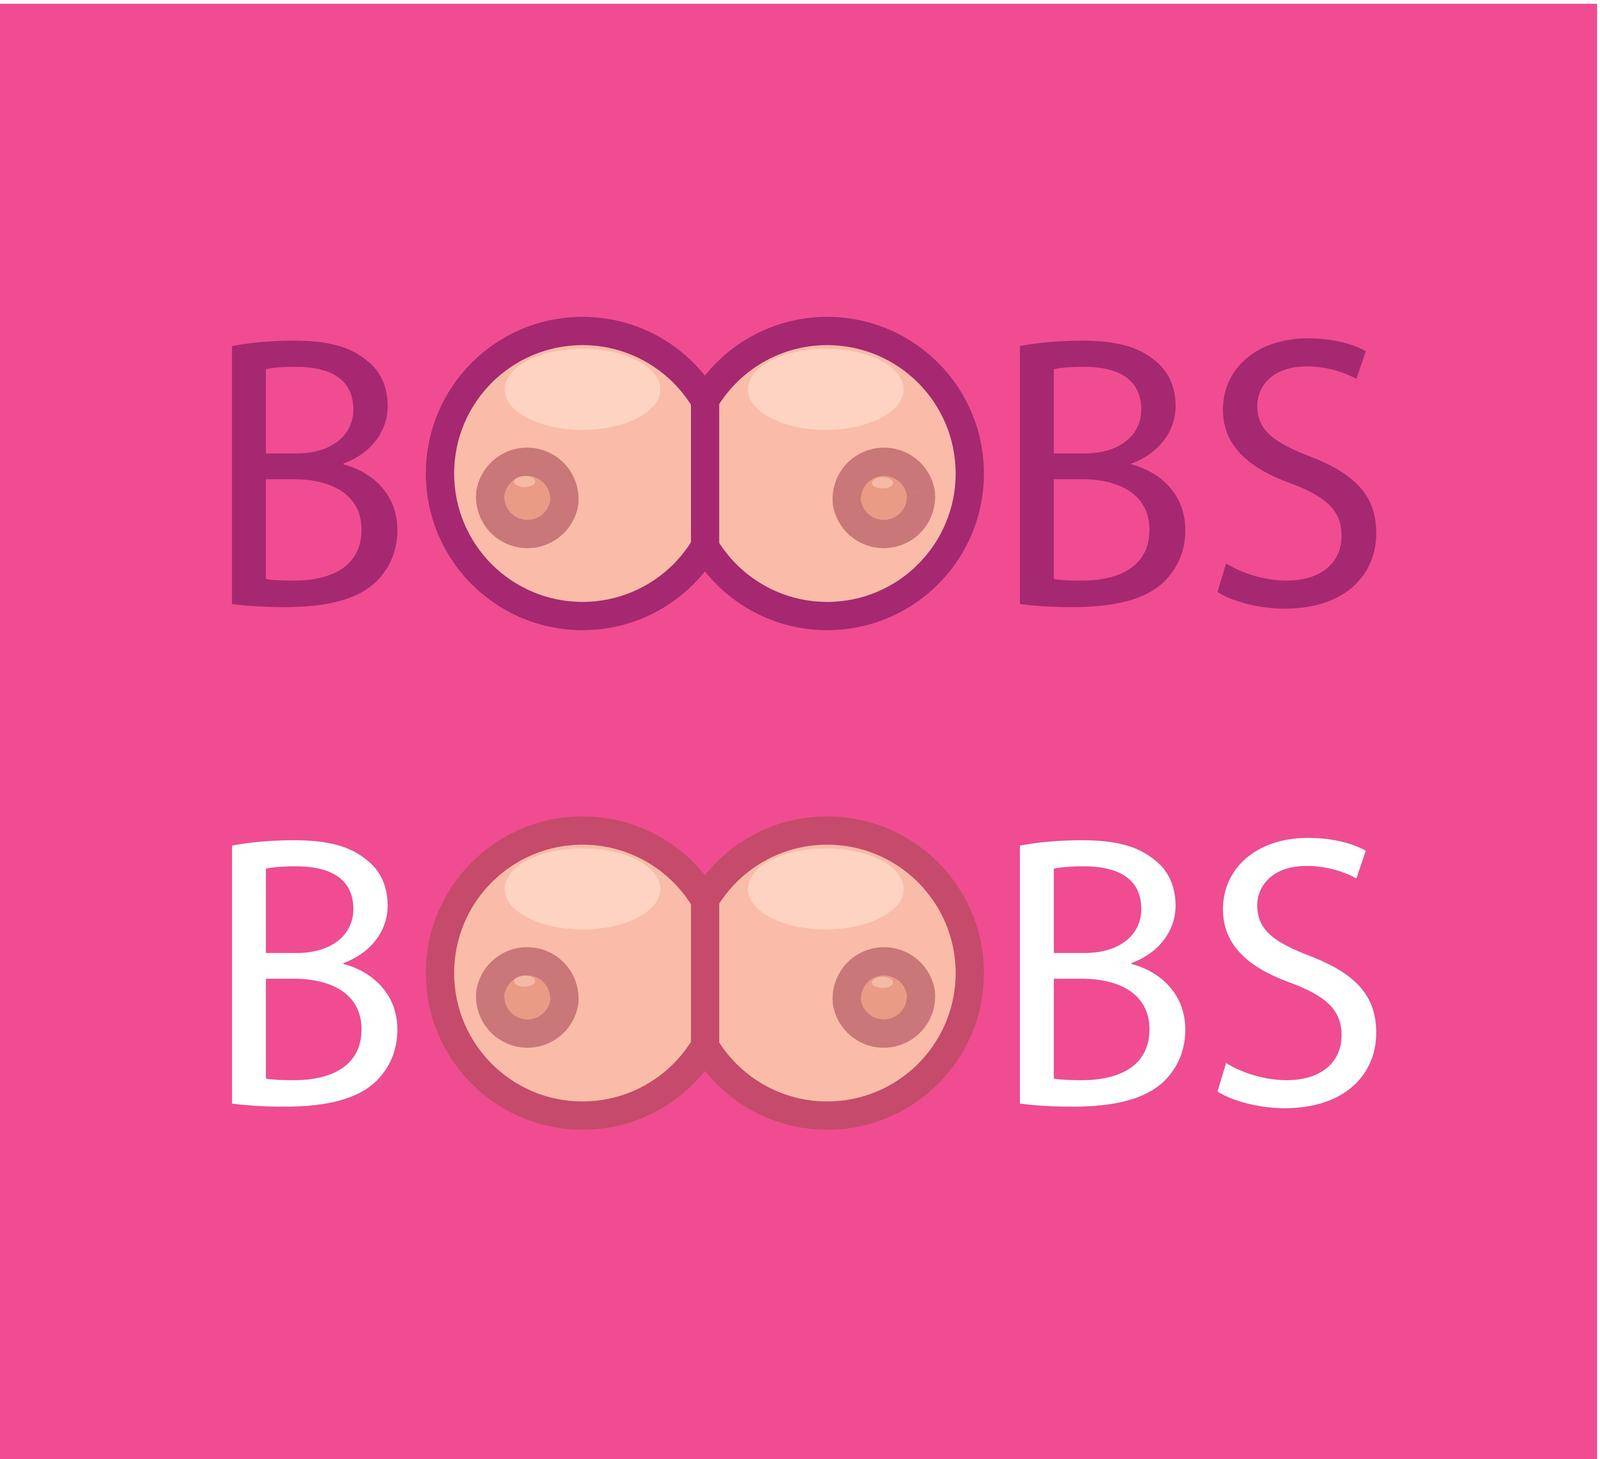 Big Lady Boobs - Creative Erotic XXX sign with boobs in word.